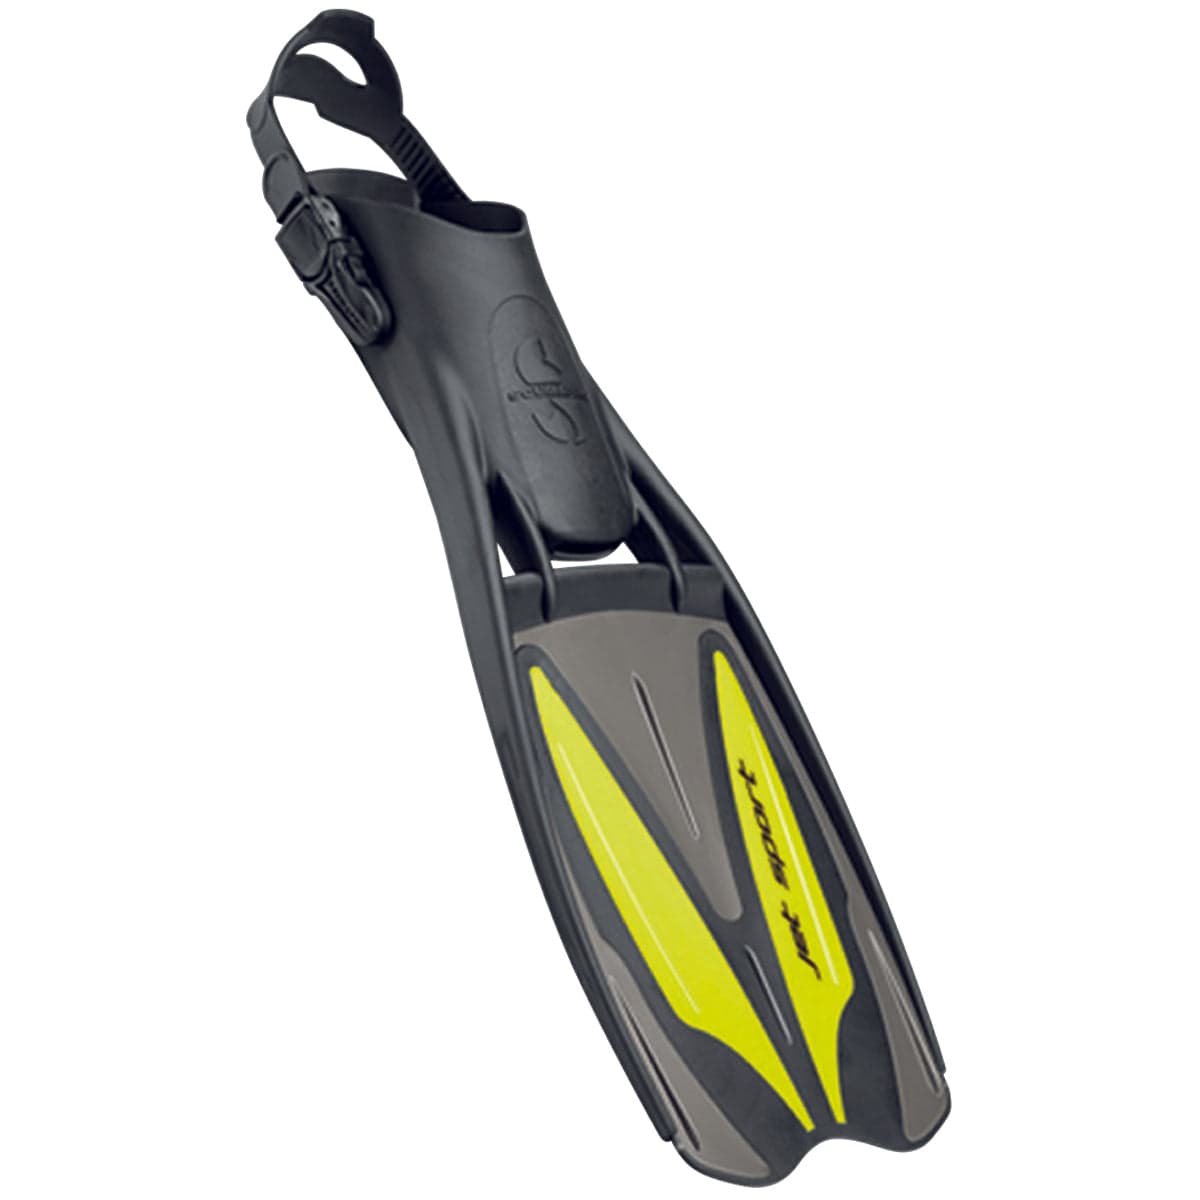 Scubapro Jet Sport Open Heel Diving Fin - Black/Gray/Yellow - 3